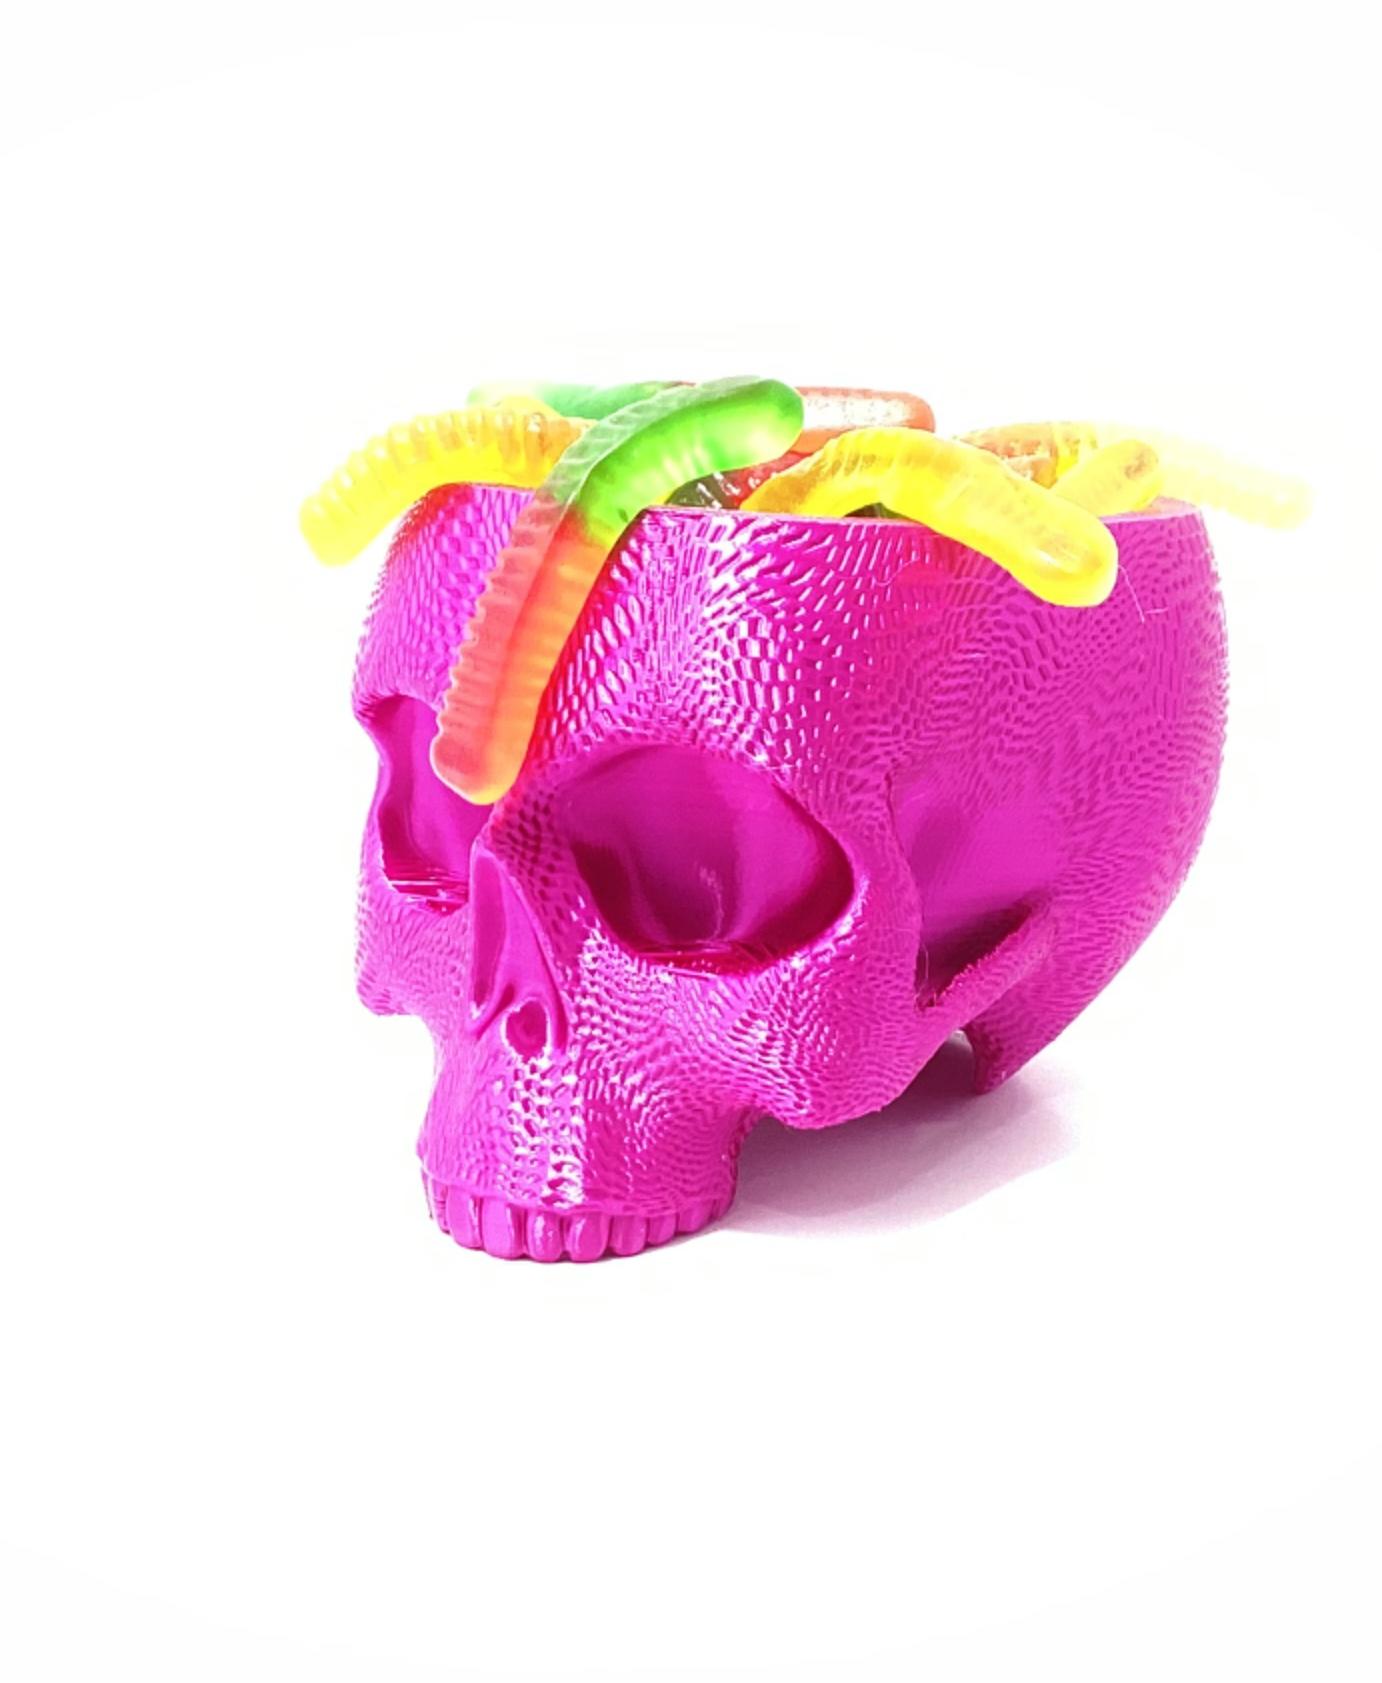 Twisted Pixel Skull Planter 3d model